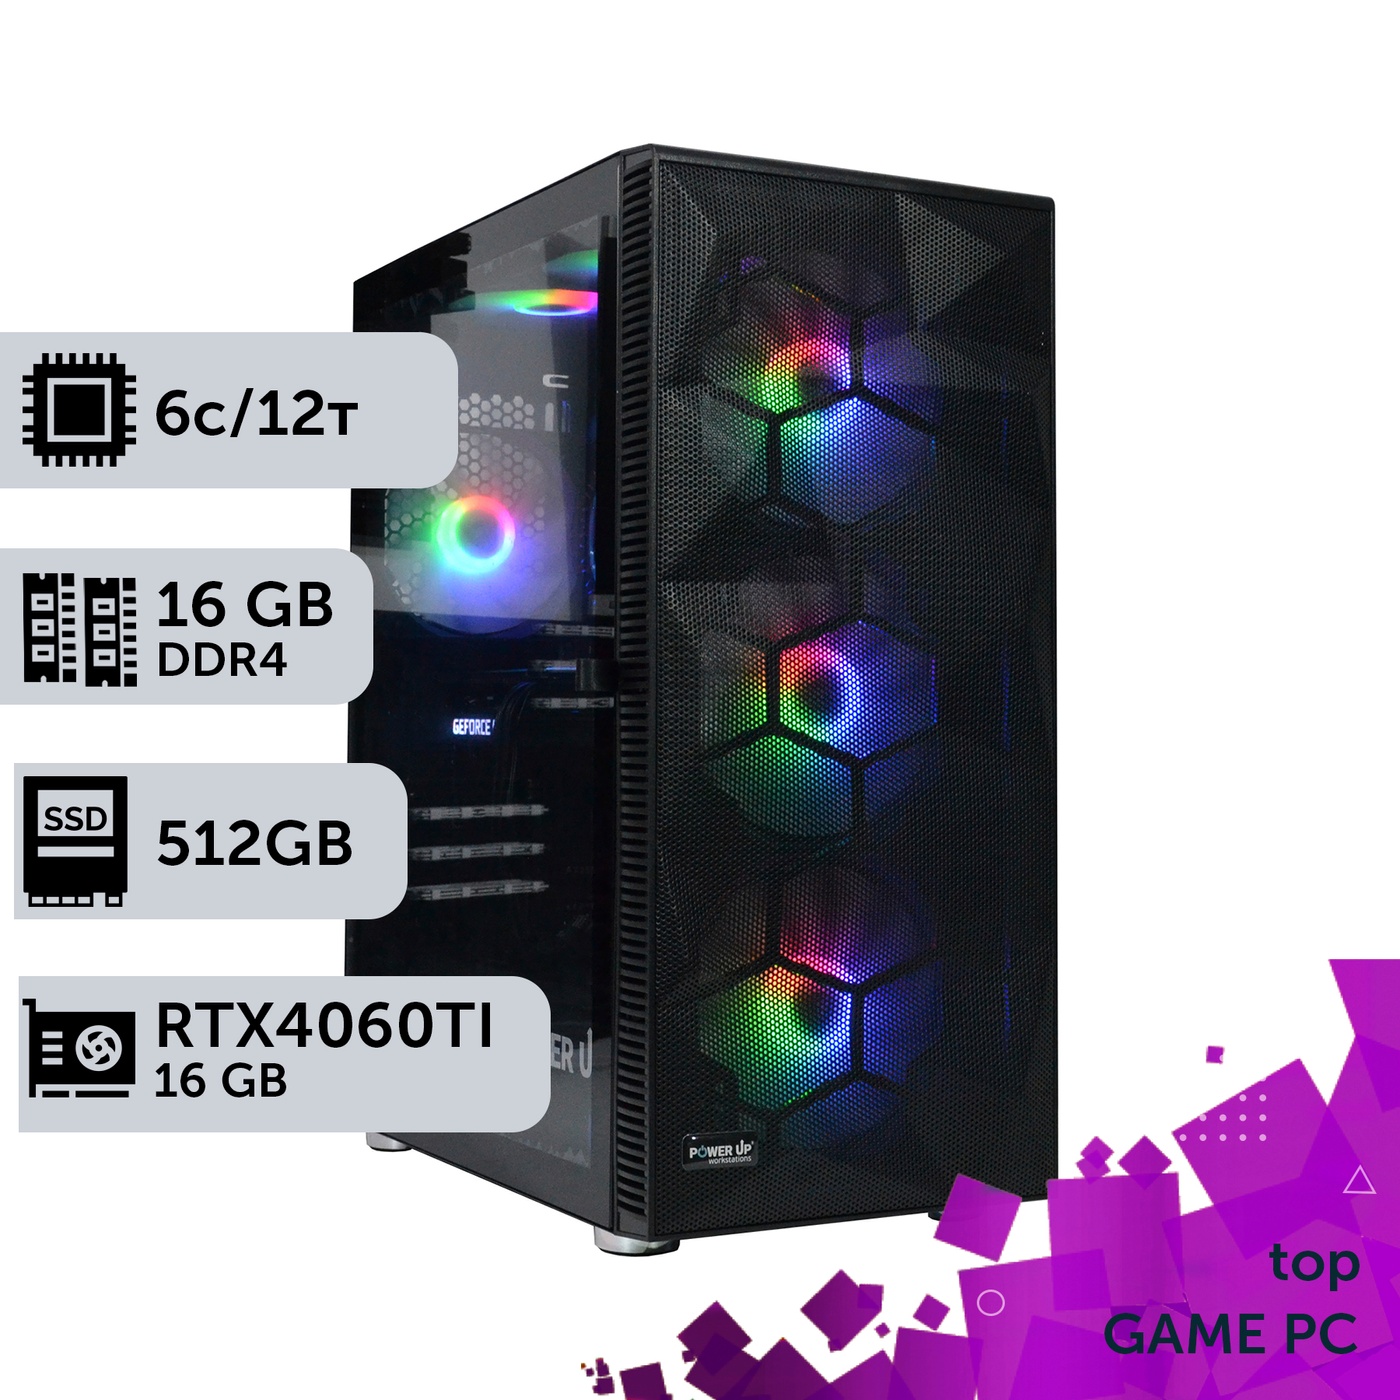 Ігровий комп'ютер GamePC TOP #317 Core i5 10400F/16 GB/SSD 512GB/GeForce RTX 4060Ti 16GB